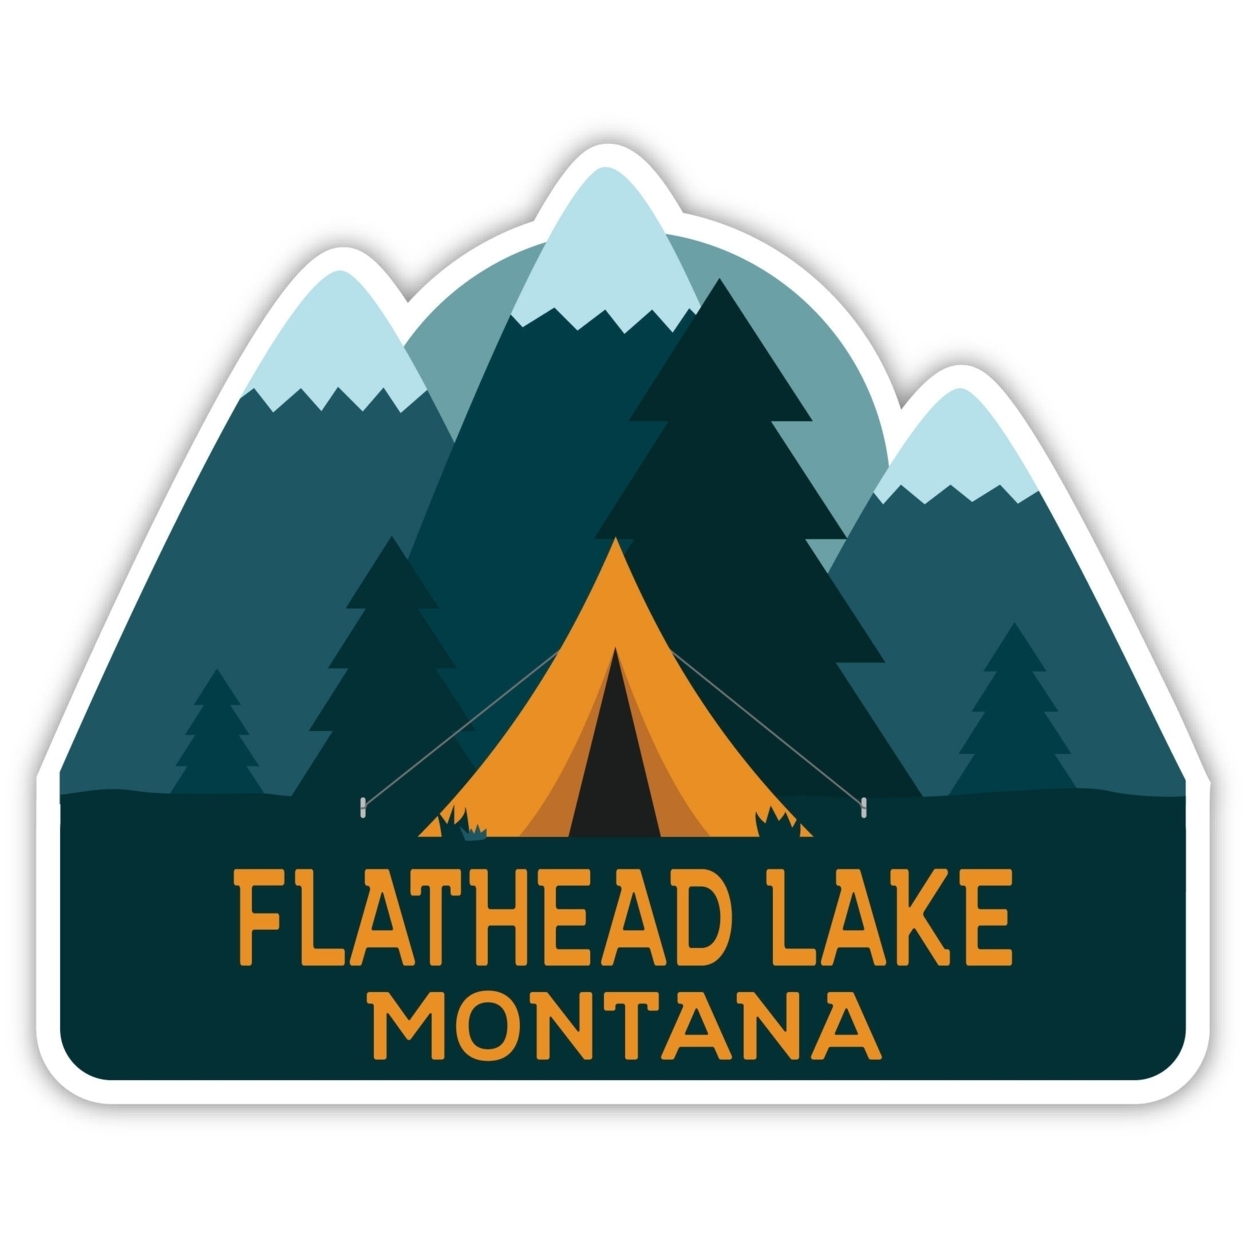 Flathead Lake Montana Souvenir Decorative Stickers (Choose Theme And Size) - 4-Pack, 2-Inch, Tent